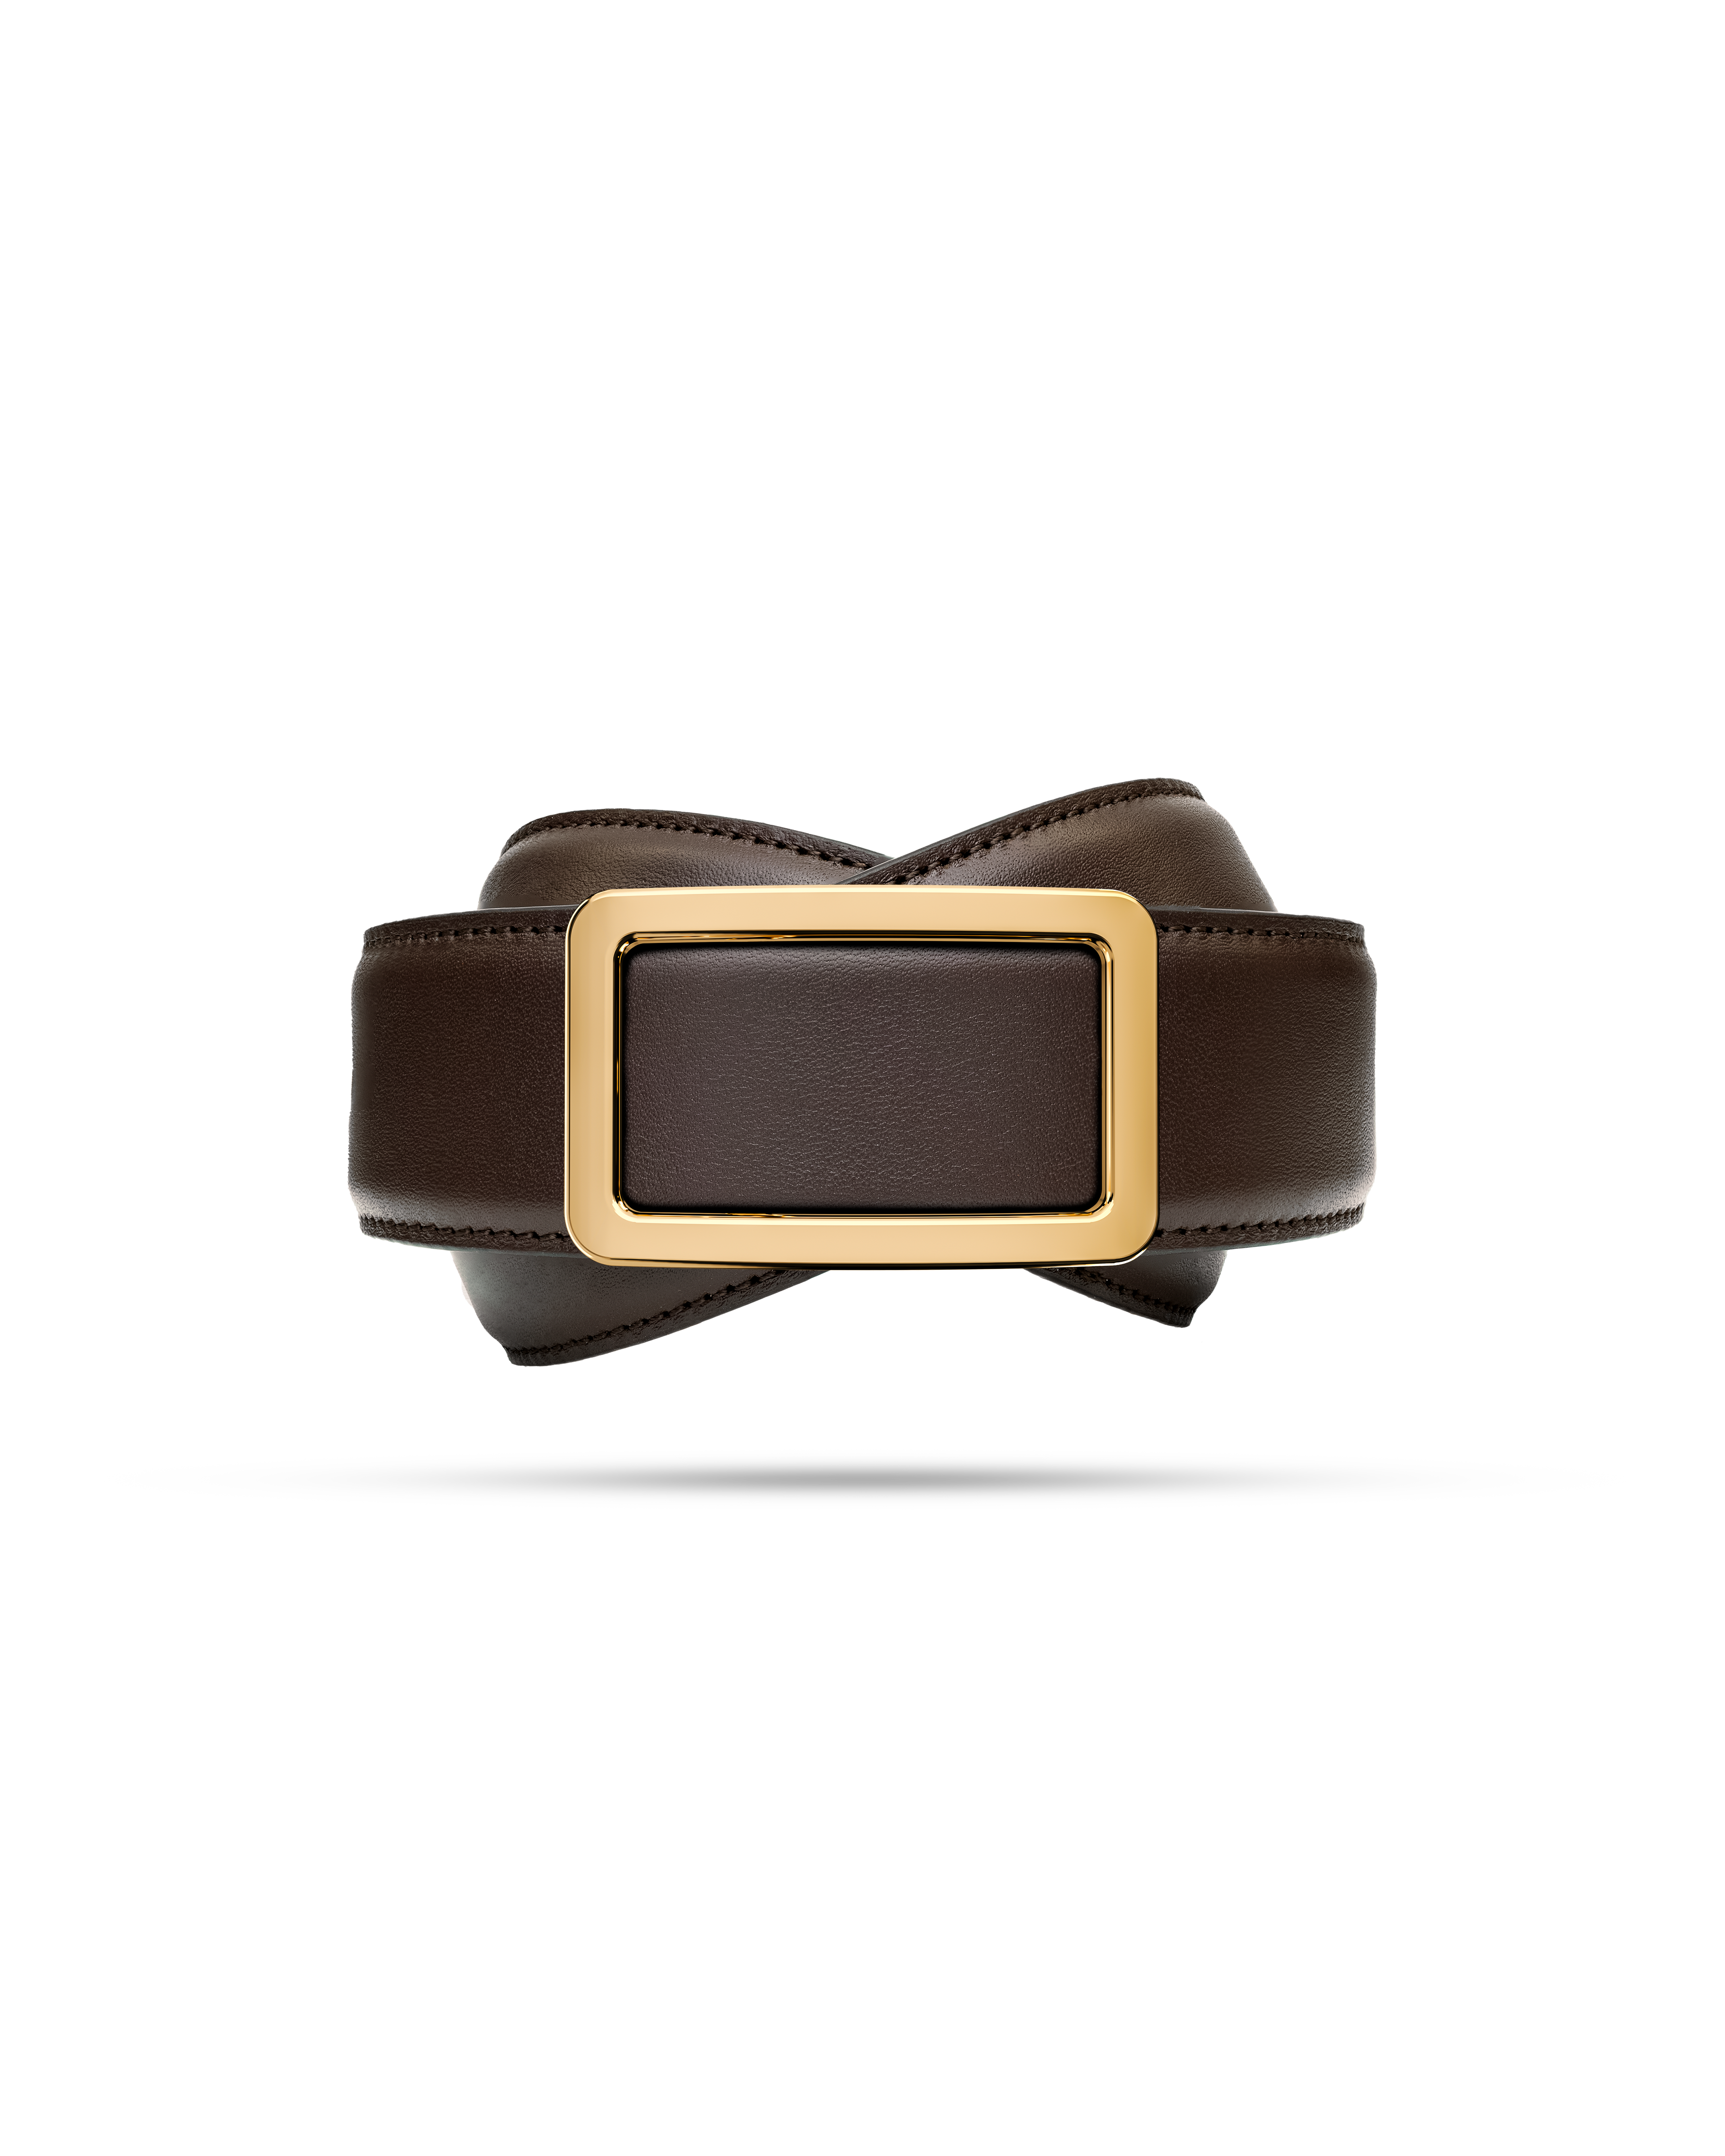 Model I Gold  —  Calfskin Chocolate Brown